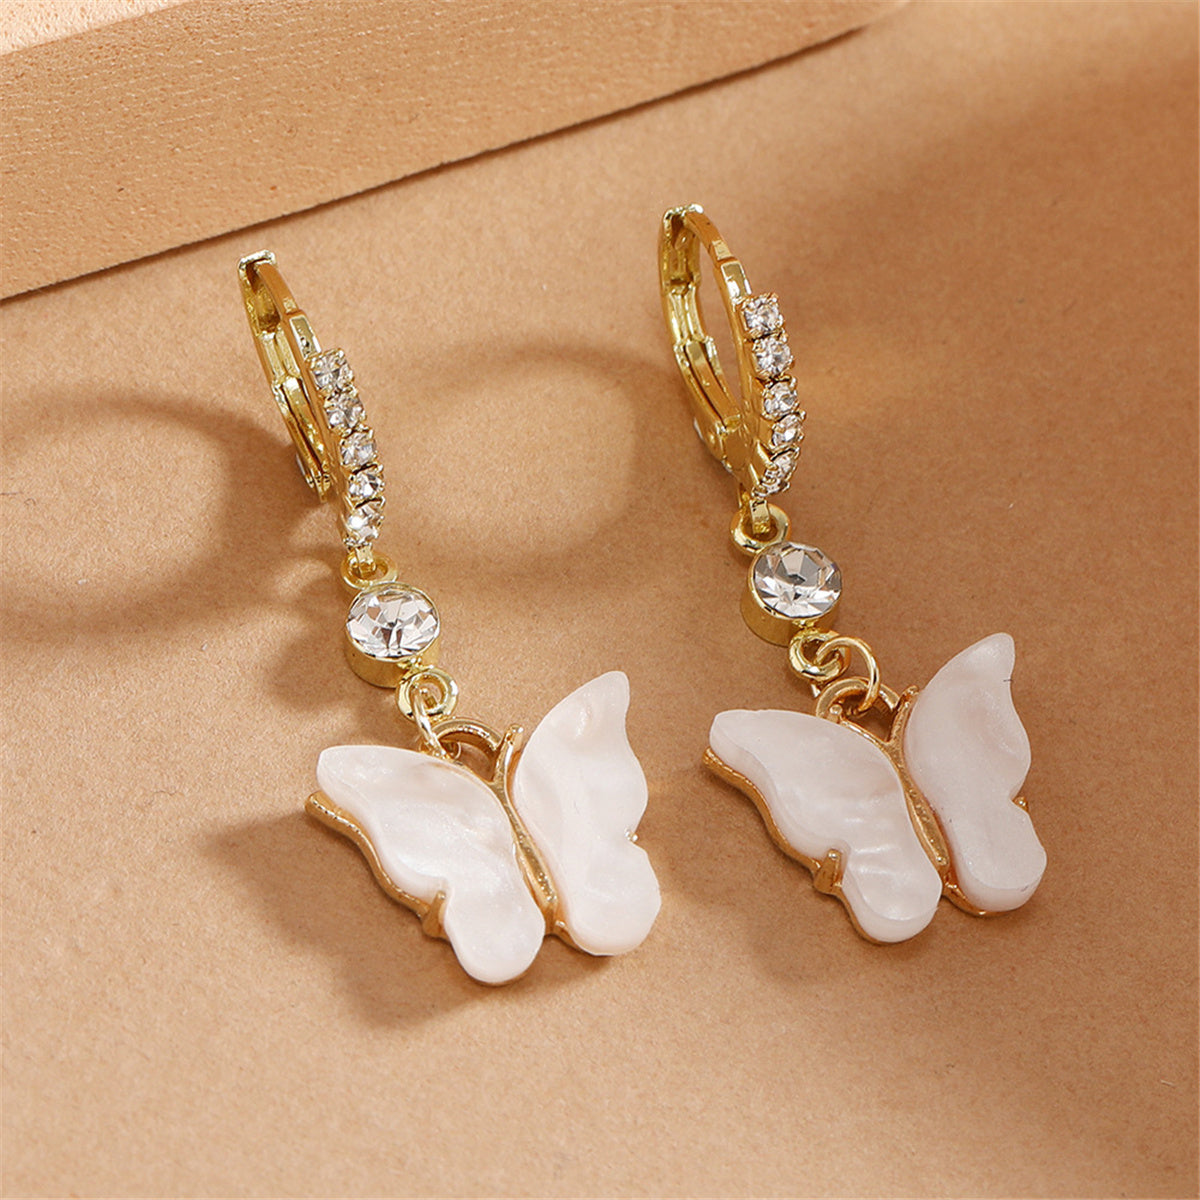 Cubic Zirconia & Acrylic 18K Gold-Plated Butterfly Huggie Earrings